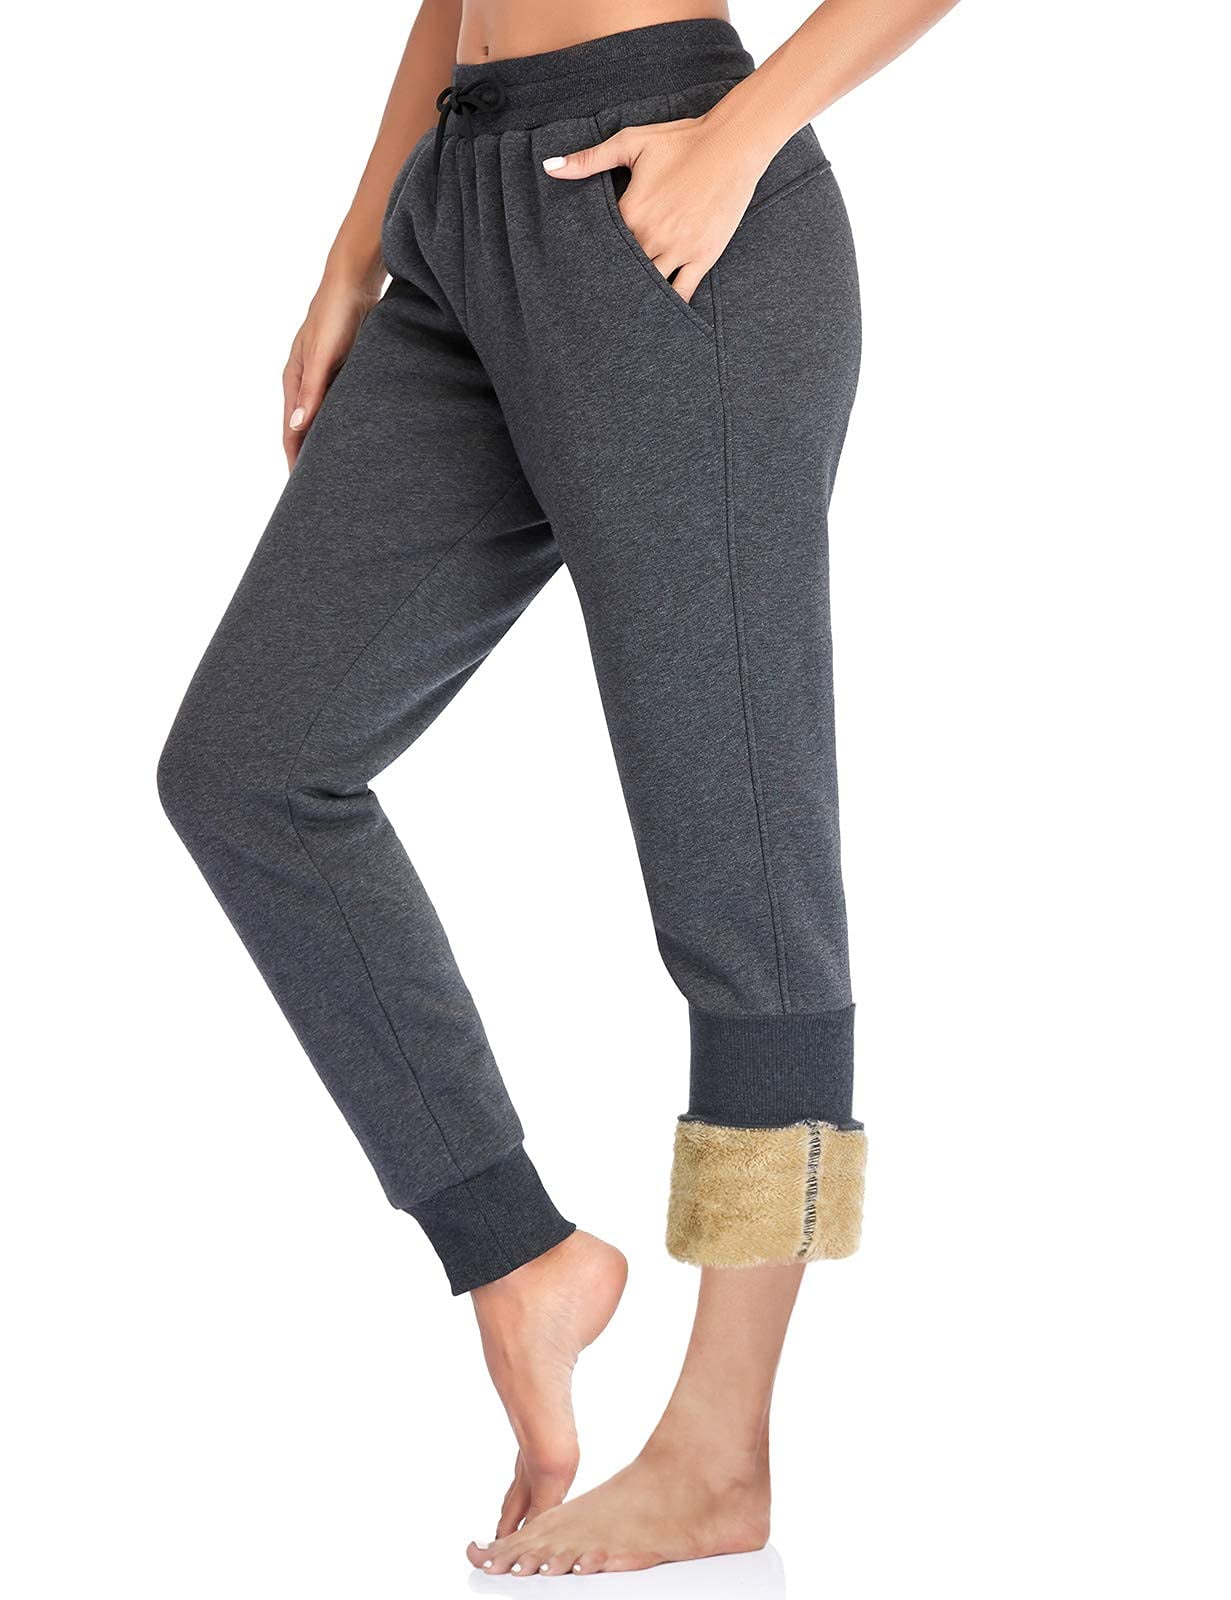 Women's Fleece Lined Pants Water Resistant Sweatpants High Waisted